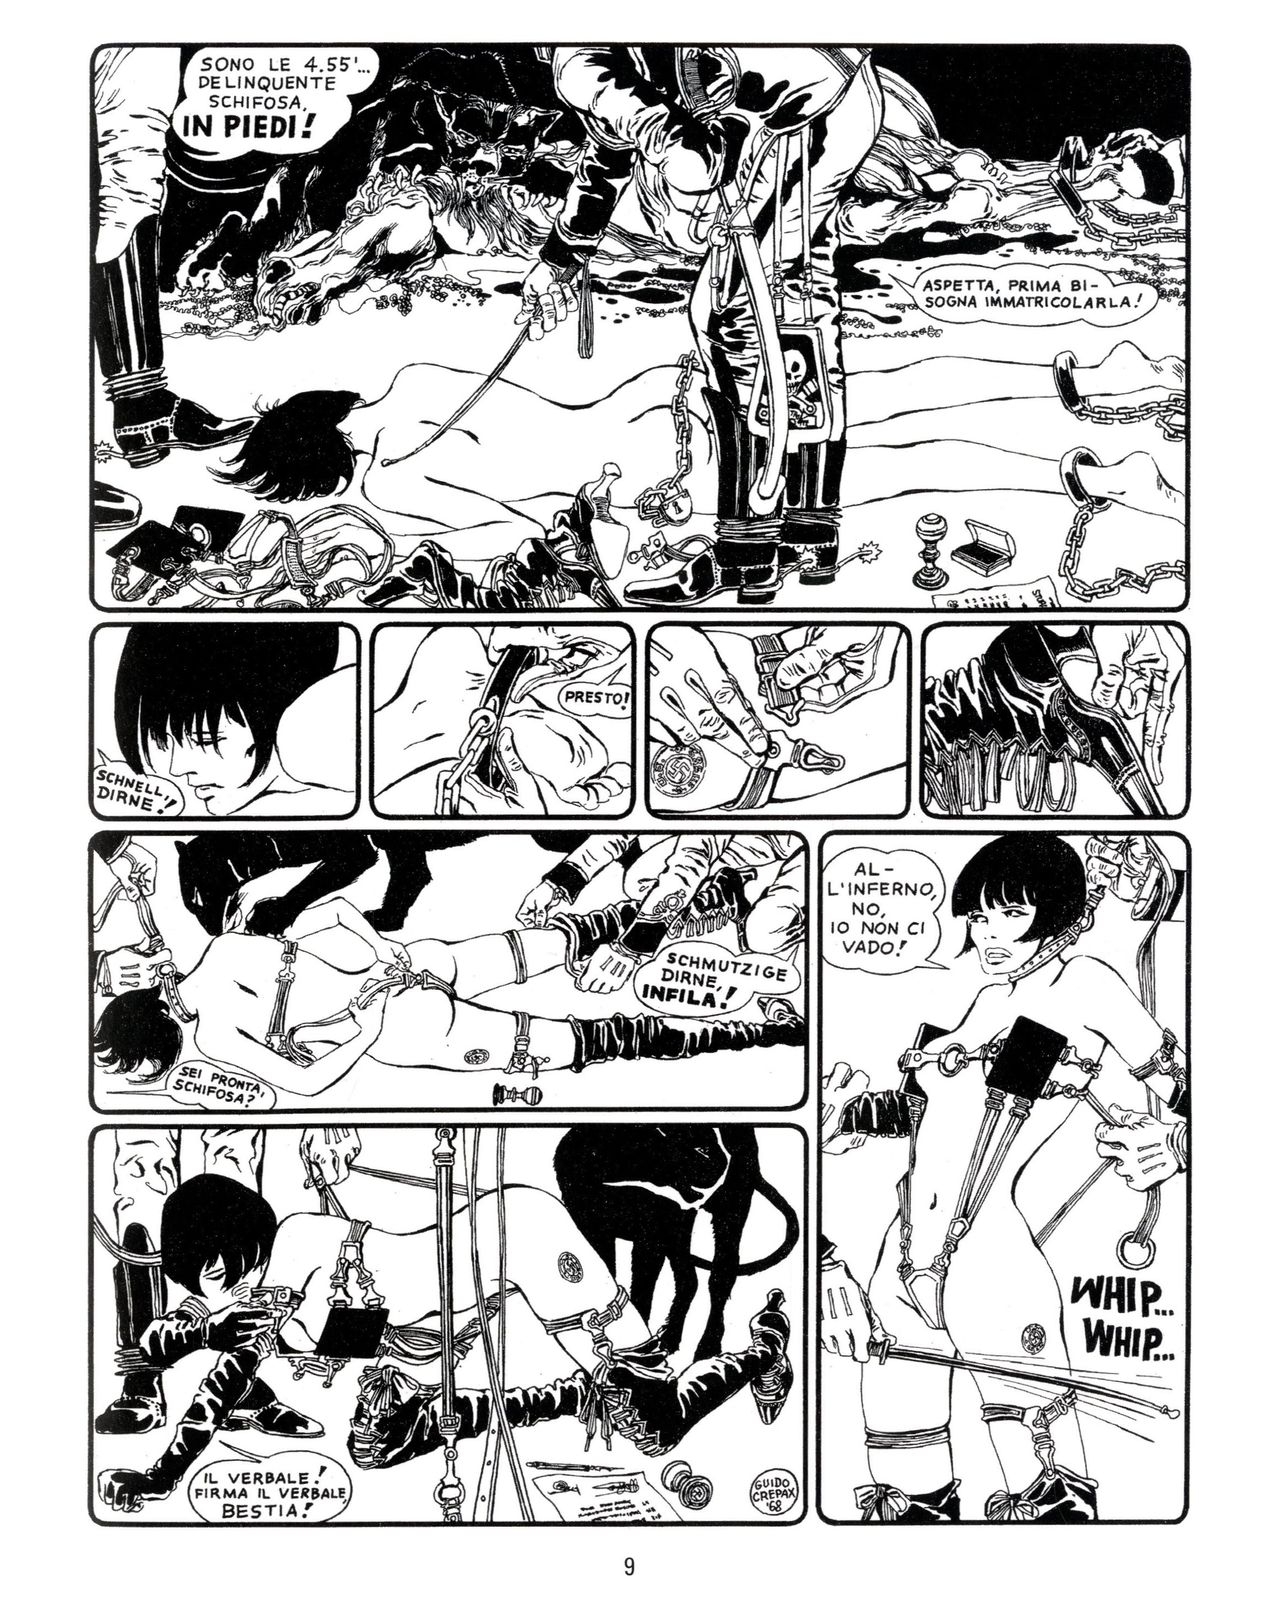 [Guido Crepax] Erotica Fumetti #25 : L'ascesa dei sotterranei : I cavalieri ciechi [Italian] 12